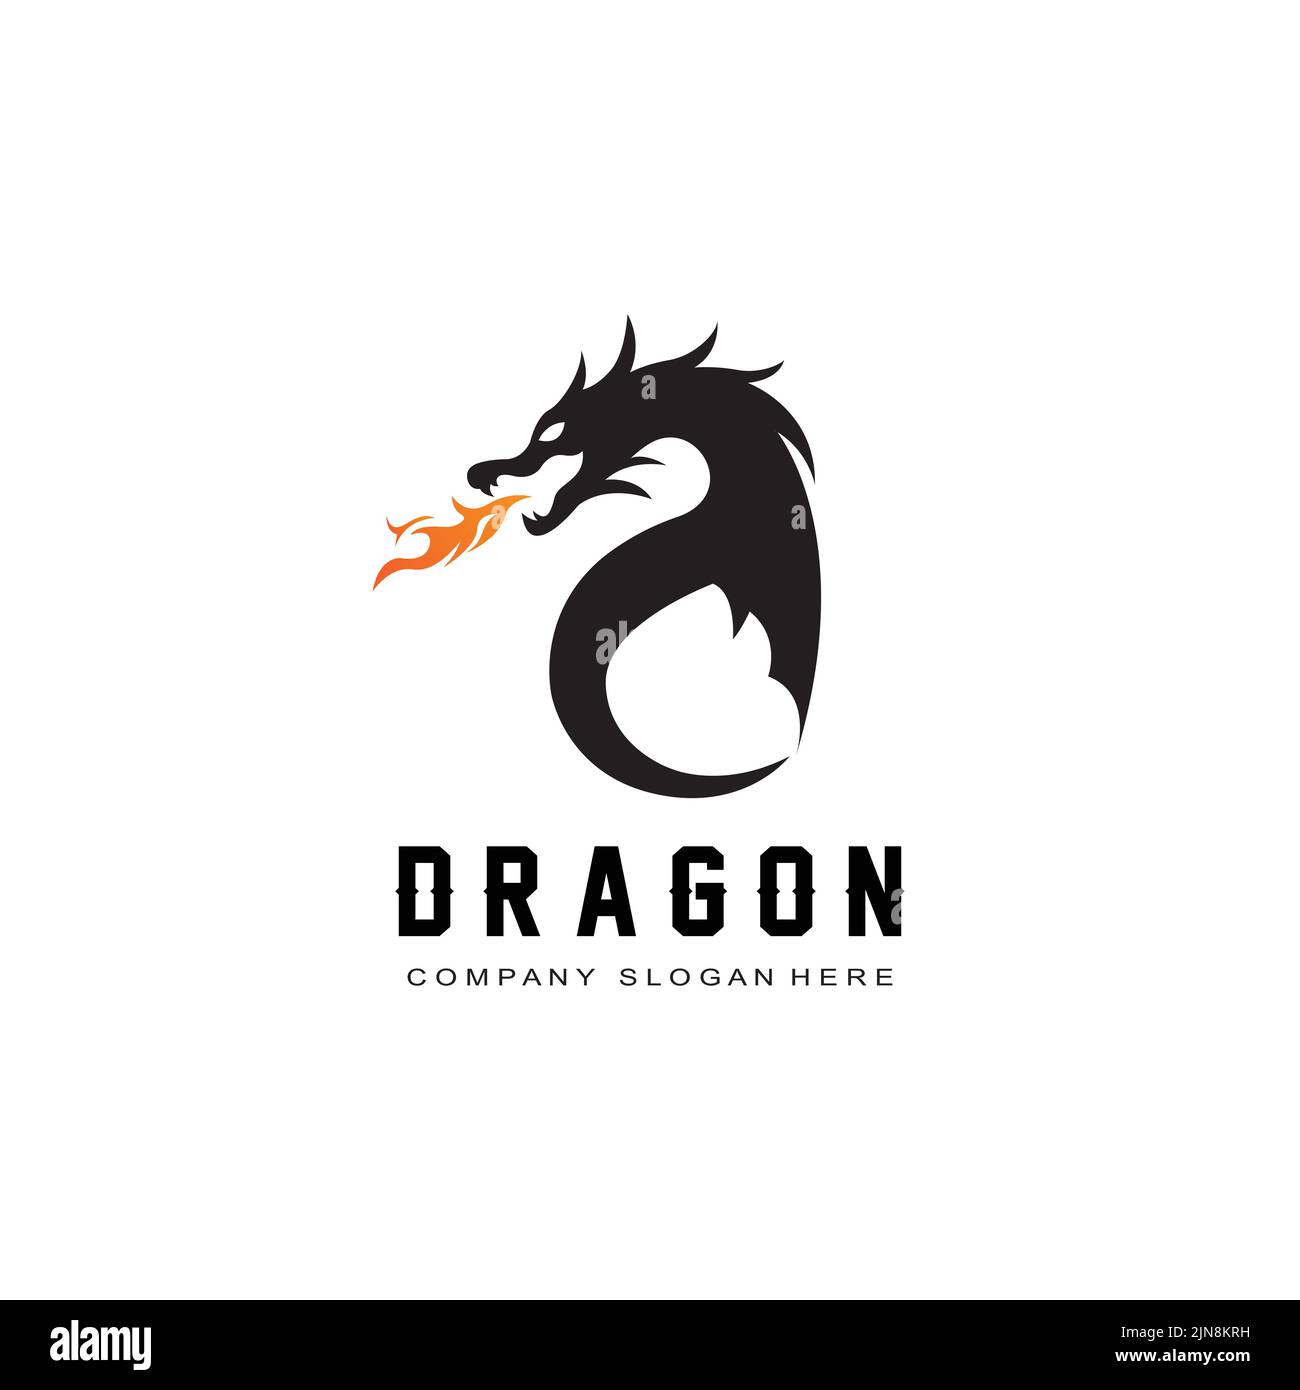 Download Red Dragon HD Logo Wallpaper | Wallpapers.com